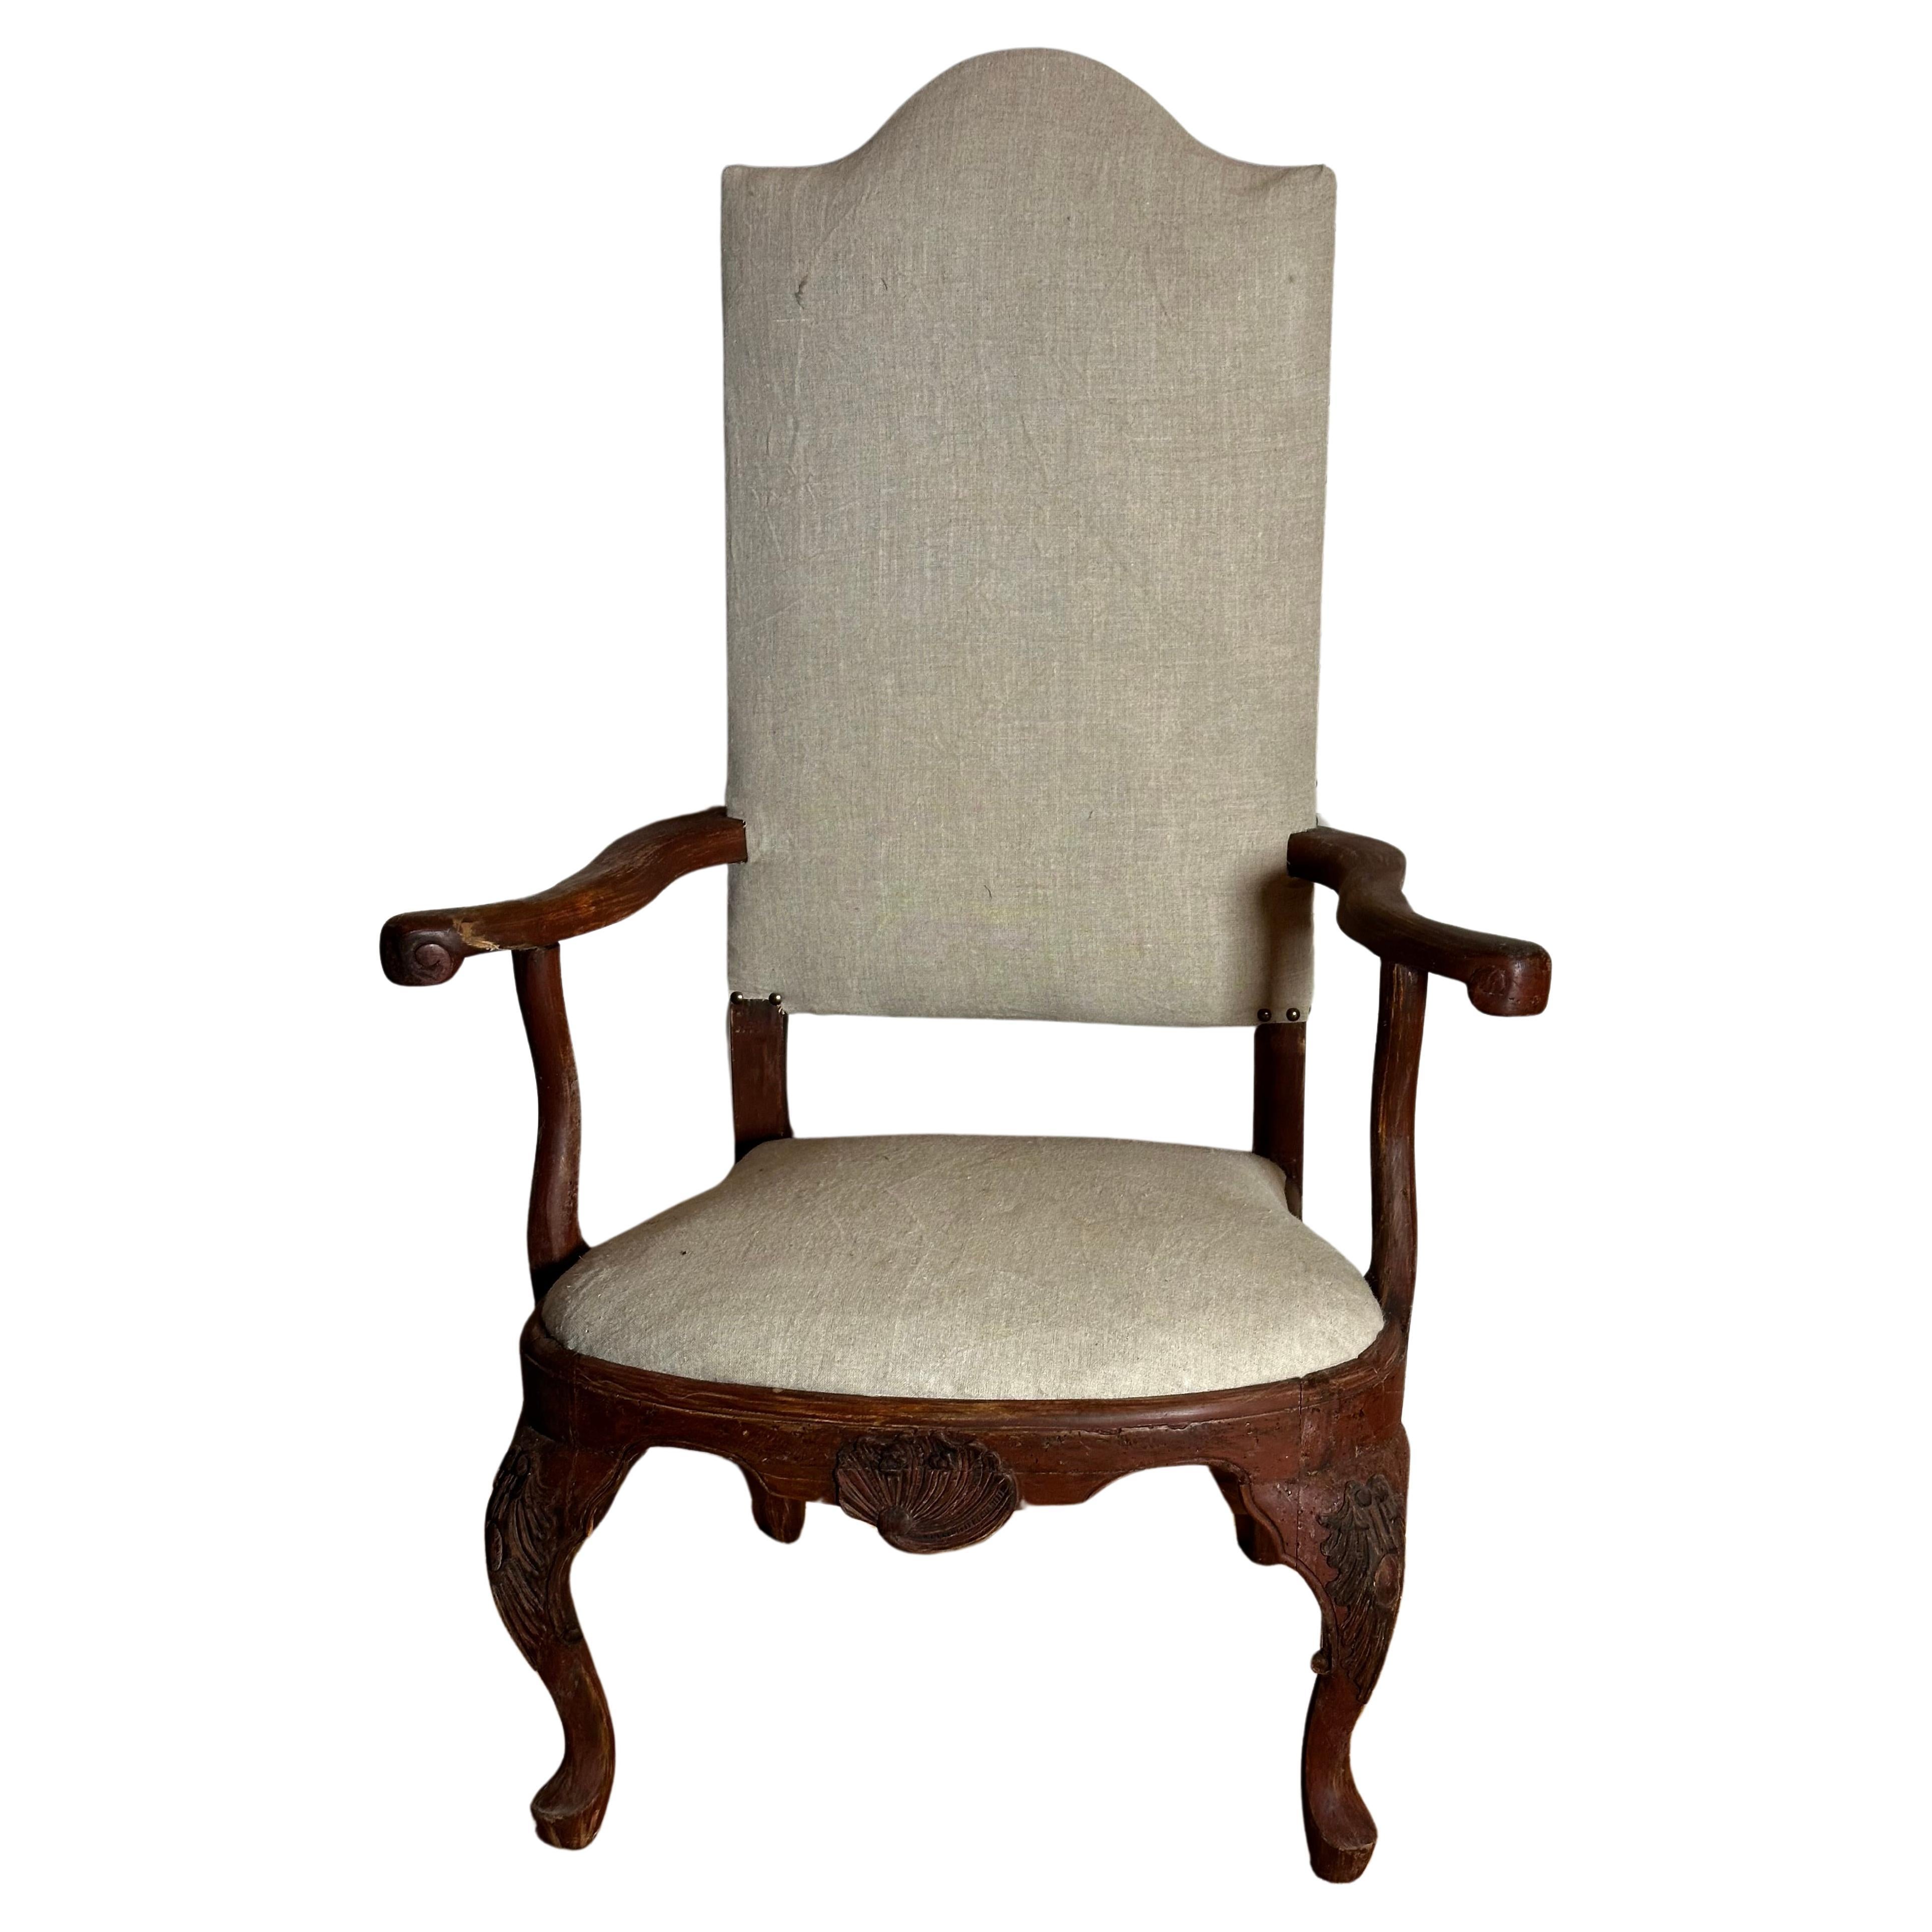 Sessel im späten Barockstil des 18. Jahrhunderts in originaler Farbe